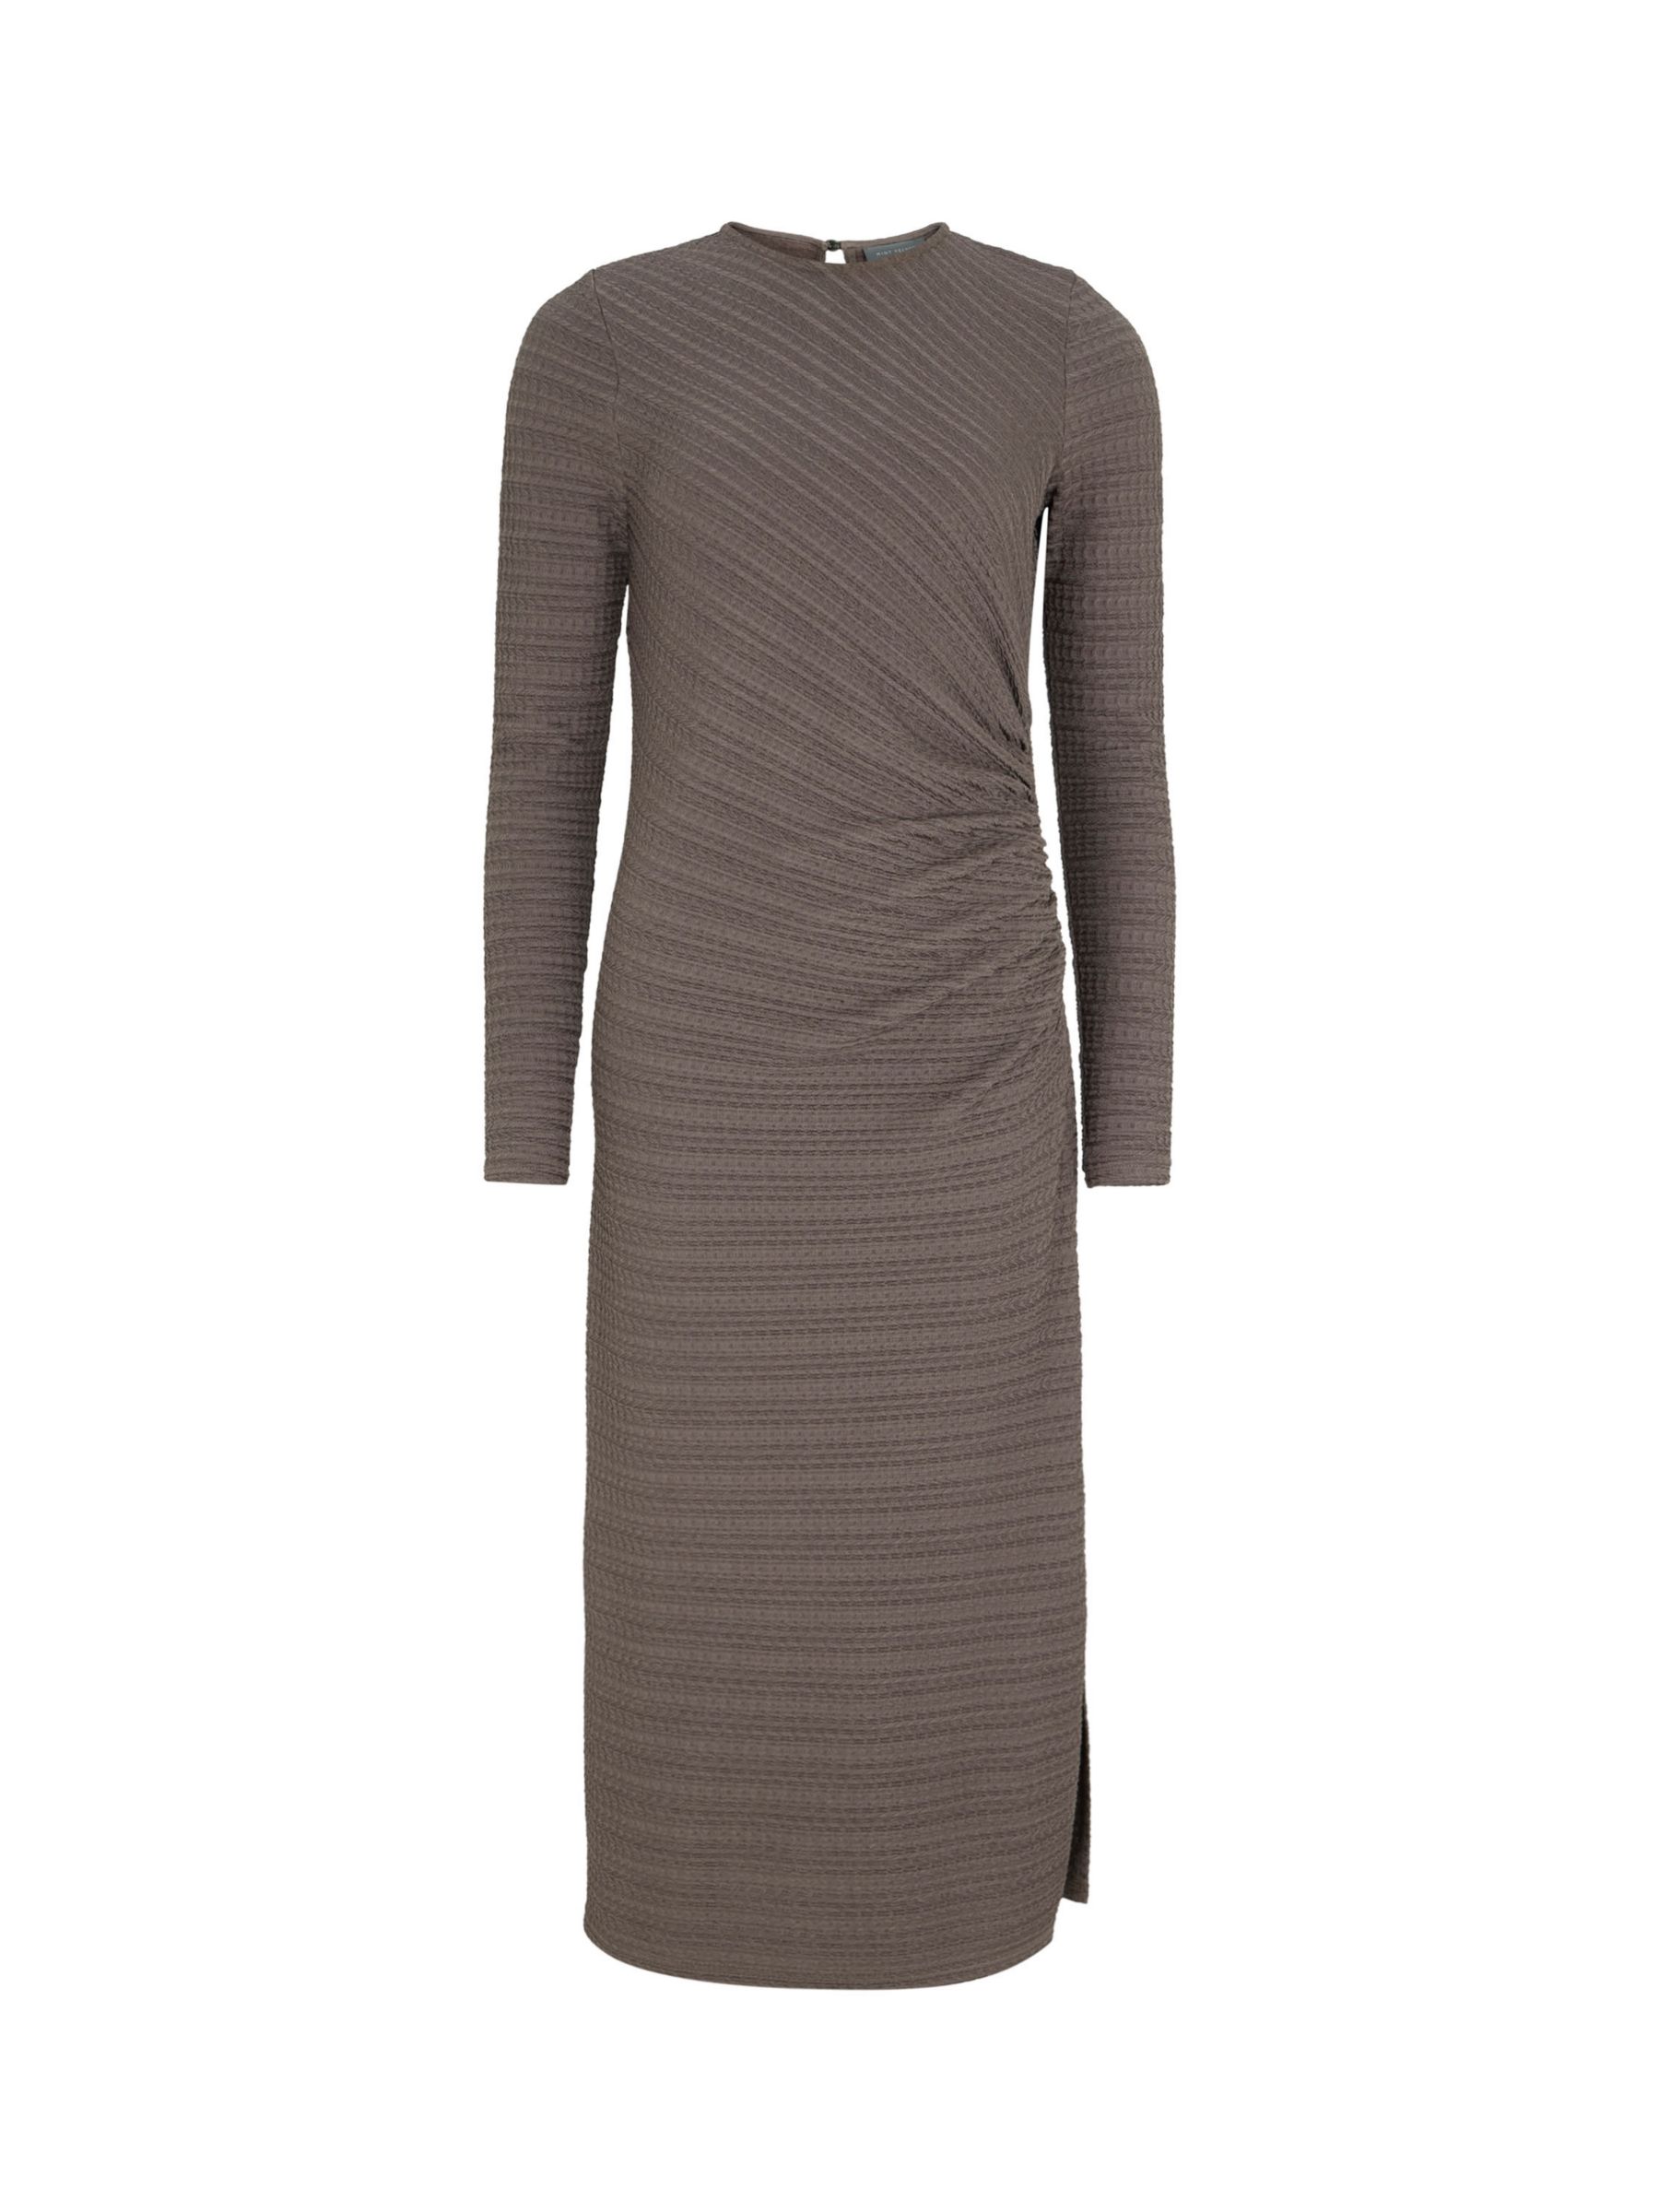 Mint Velvet Textured Midi Dress, Dark Brown at John Lewis & Partners